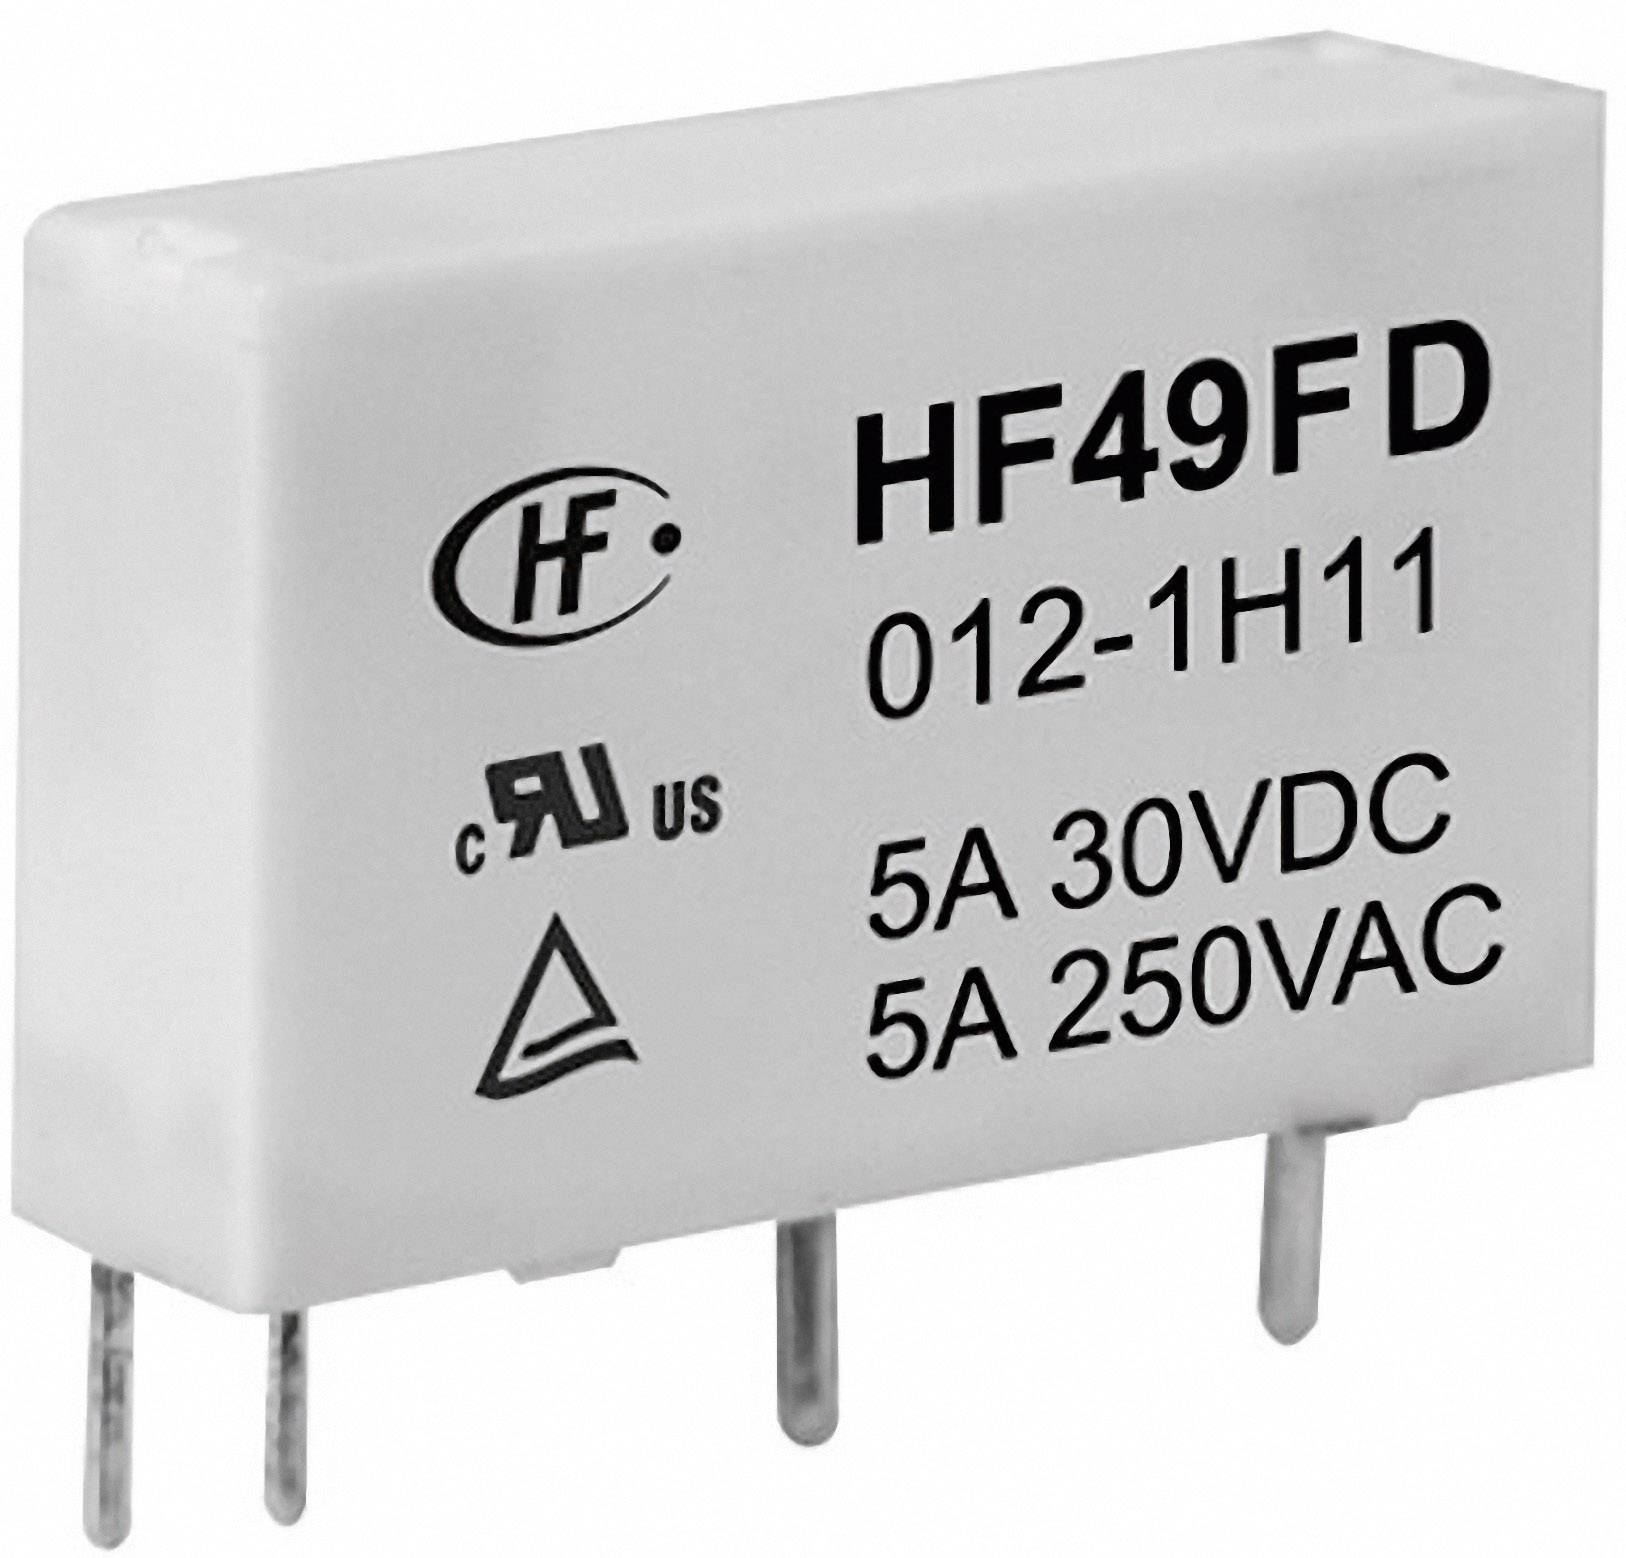 HF49FD/005-1H11T PCB Mount Sealed Miniature Power Relay x 10pcs 